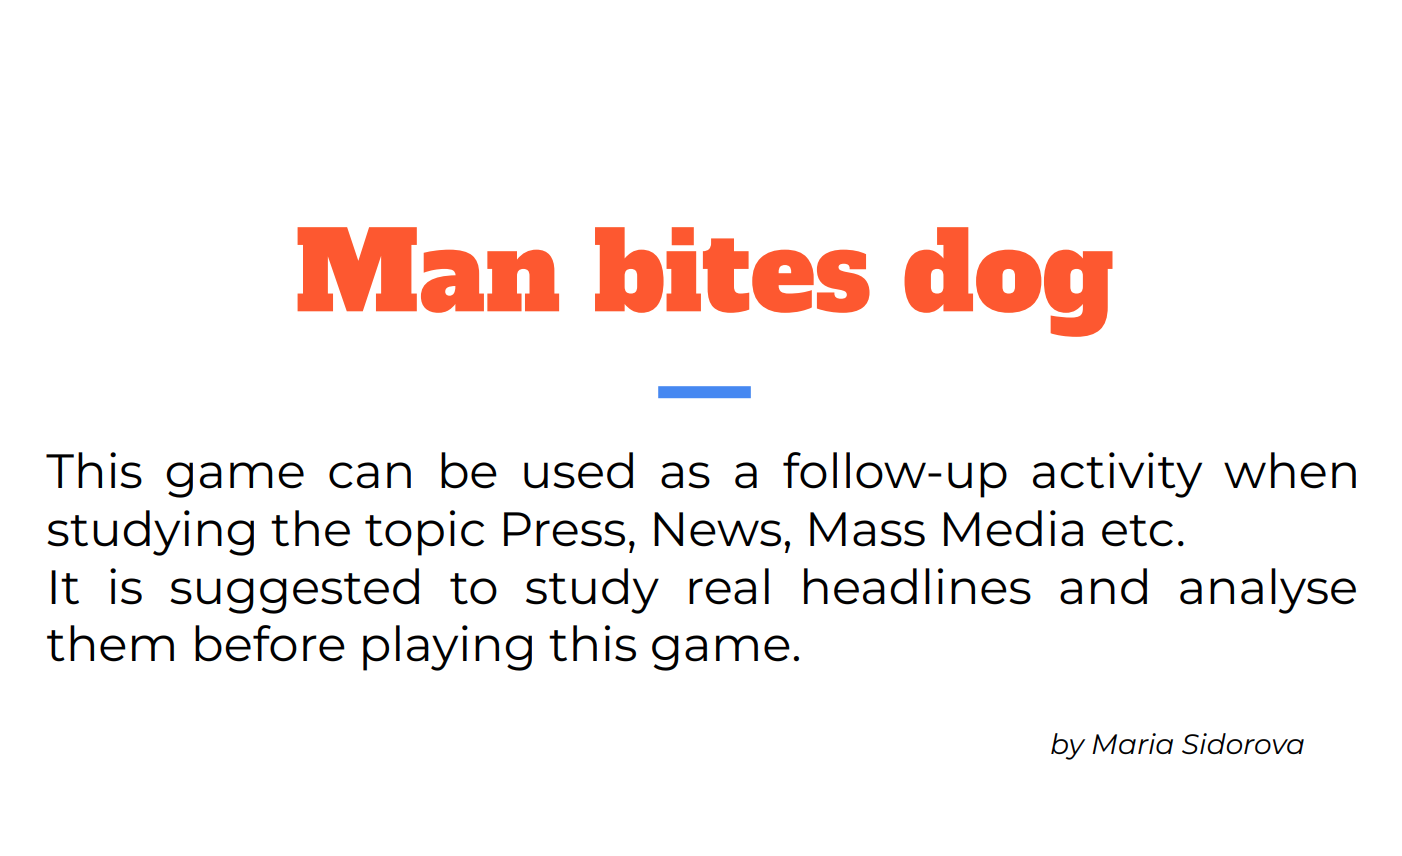 Man bites dog (newspaper headline game)